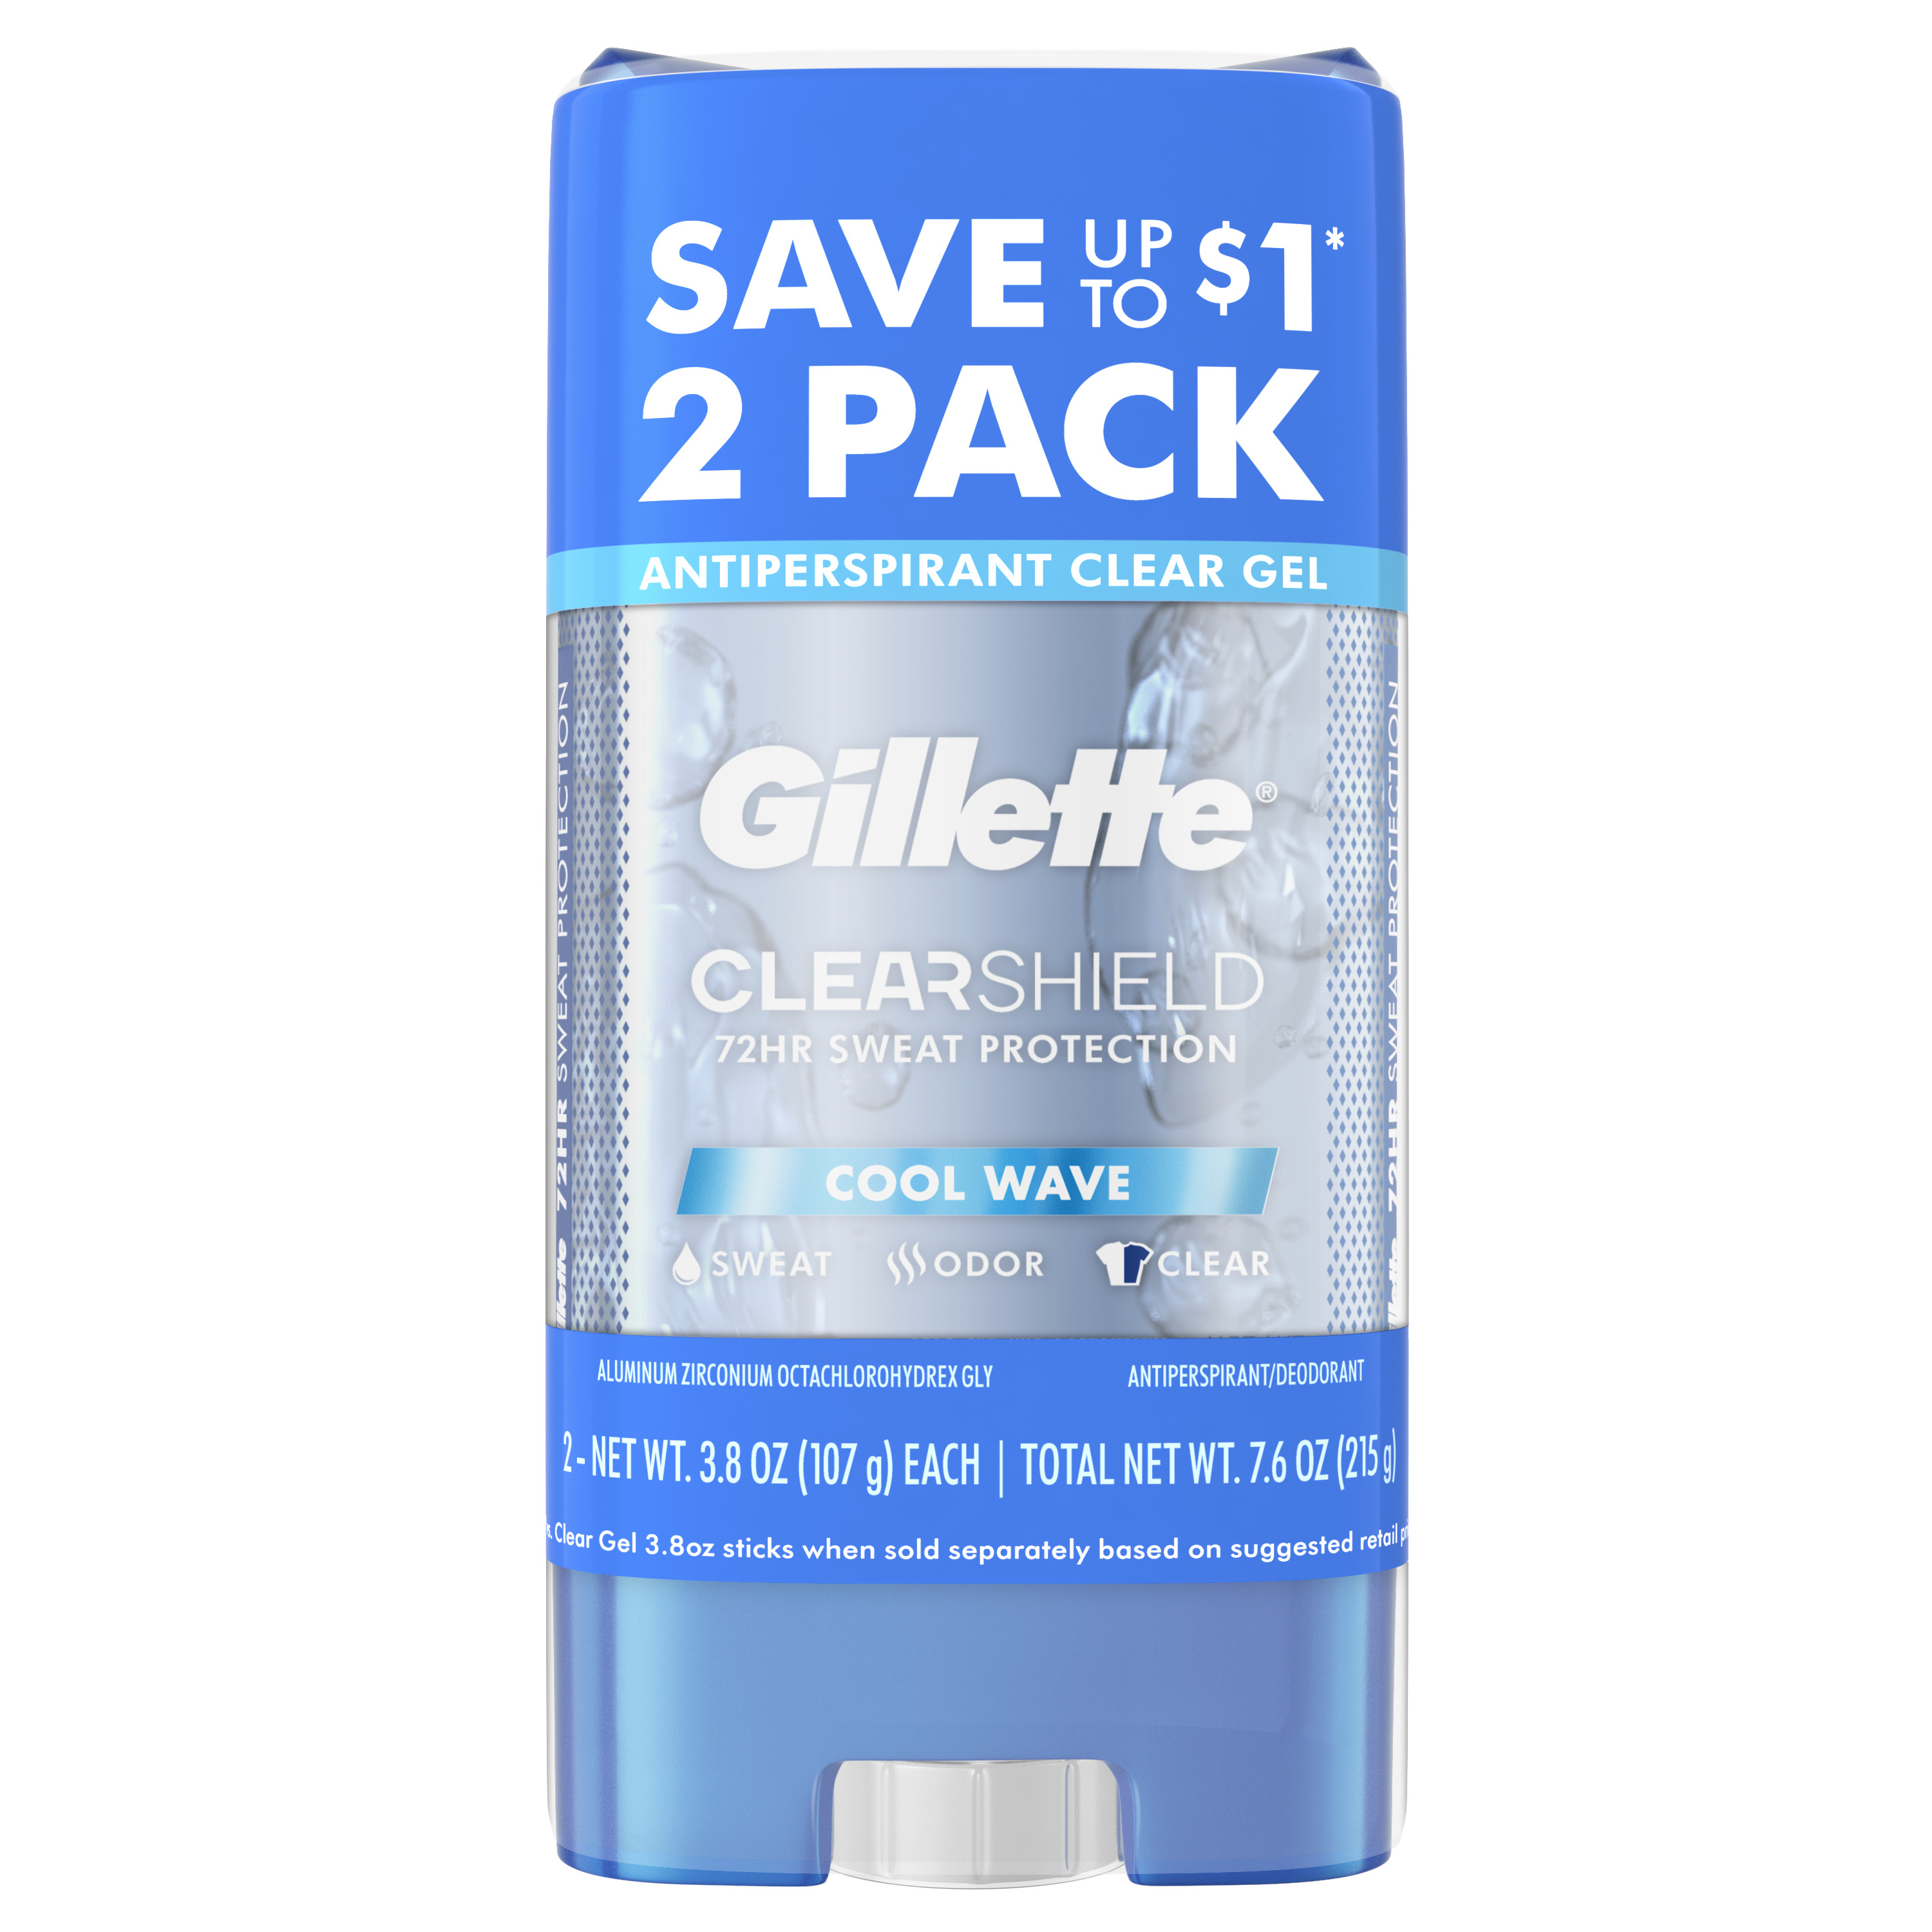 Gillette Antiperspirant Deodorant for Men, Clear Gel, Cool Wave, Twin Pack, 3.8oz - image 2 of 8